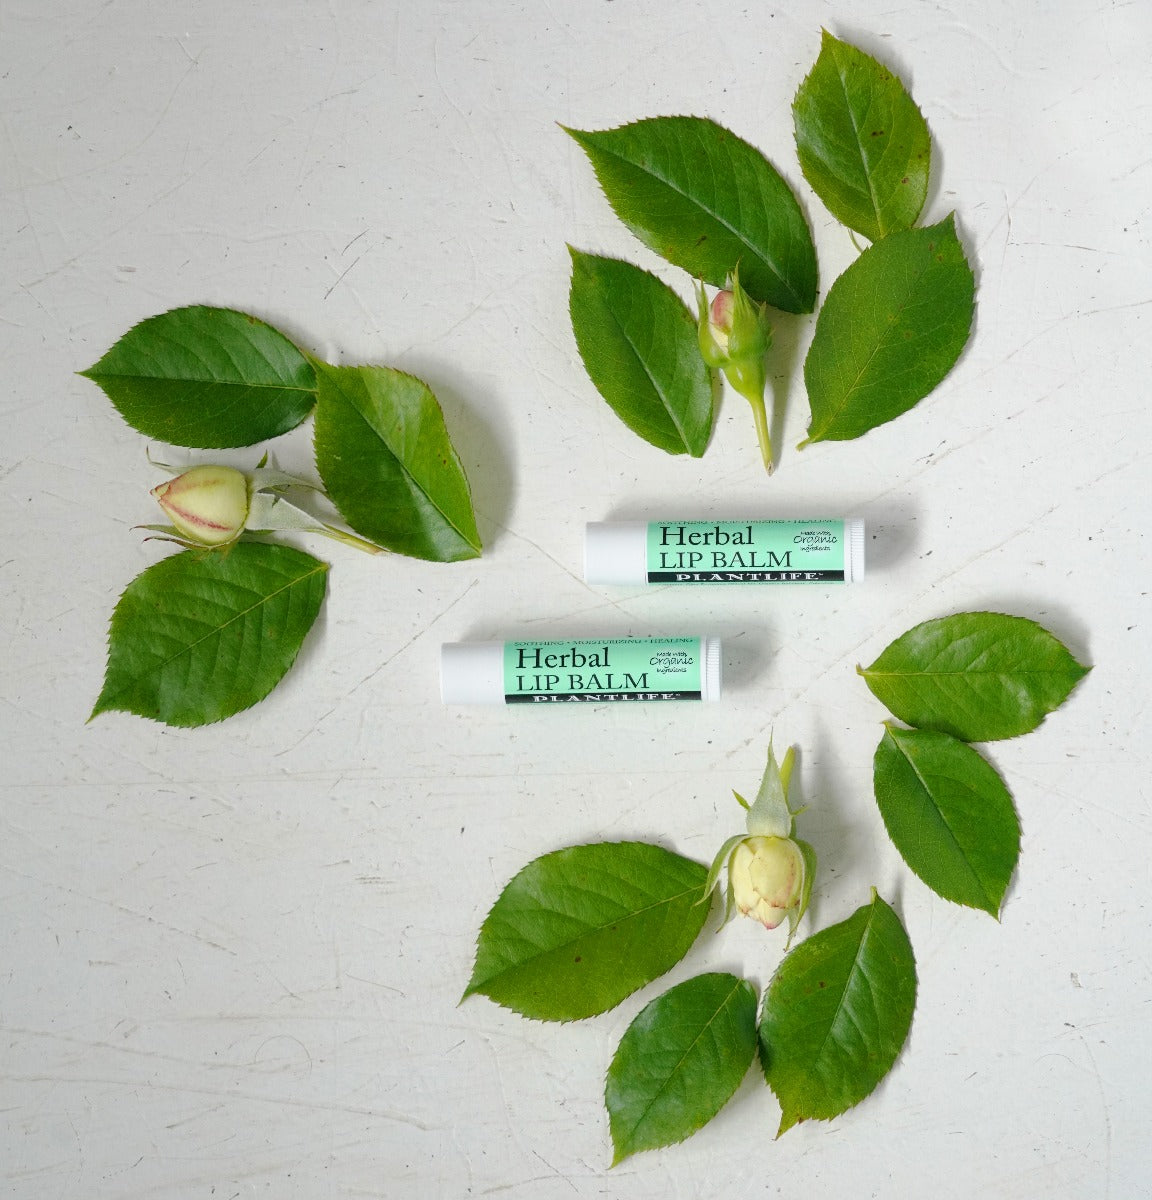 Herbal Plant Based Lip Balm